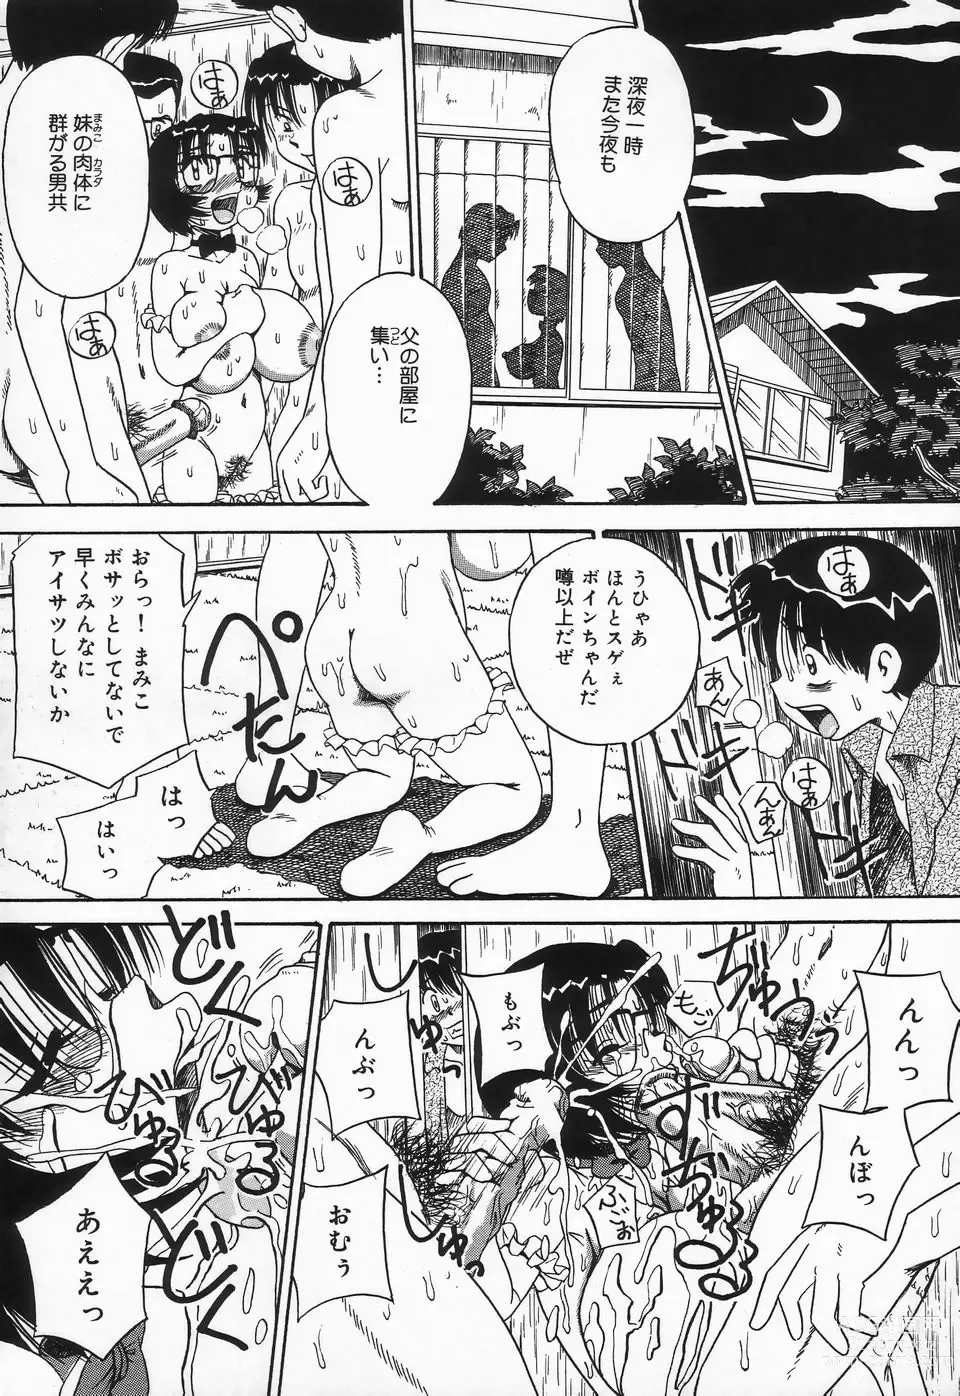 Page 163 of manga Seieki Mamire Bakunyuu Naburi